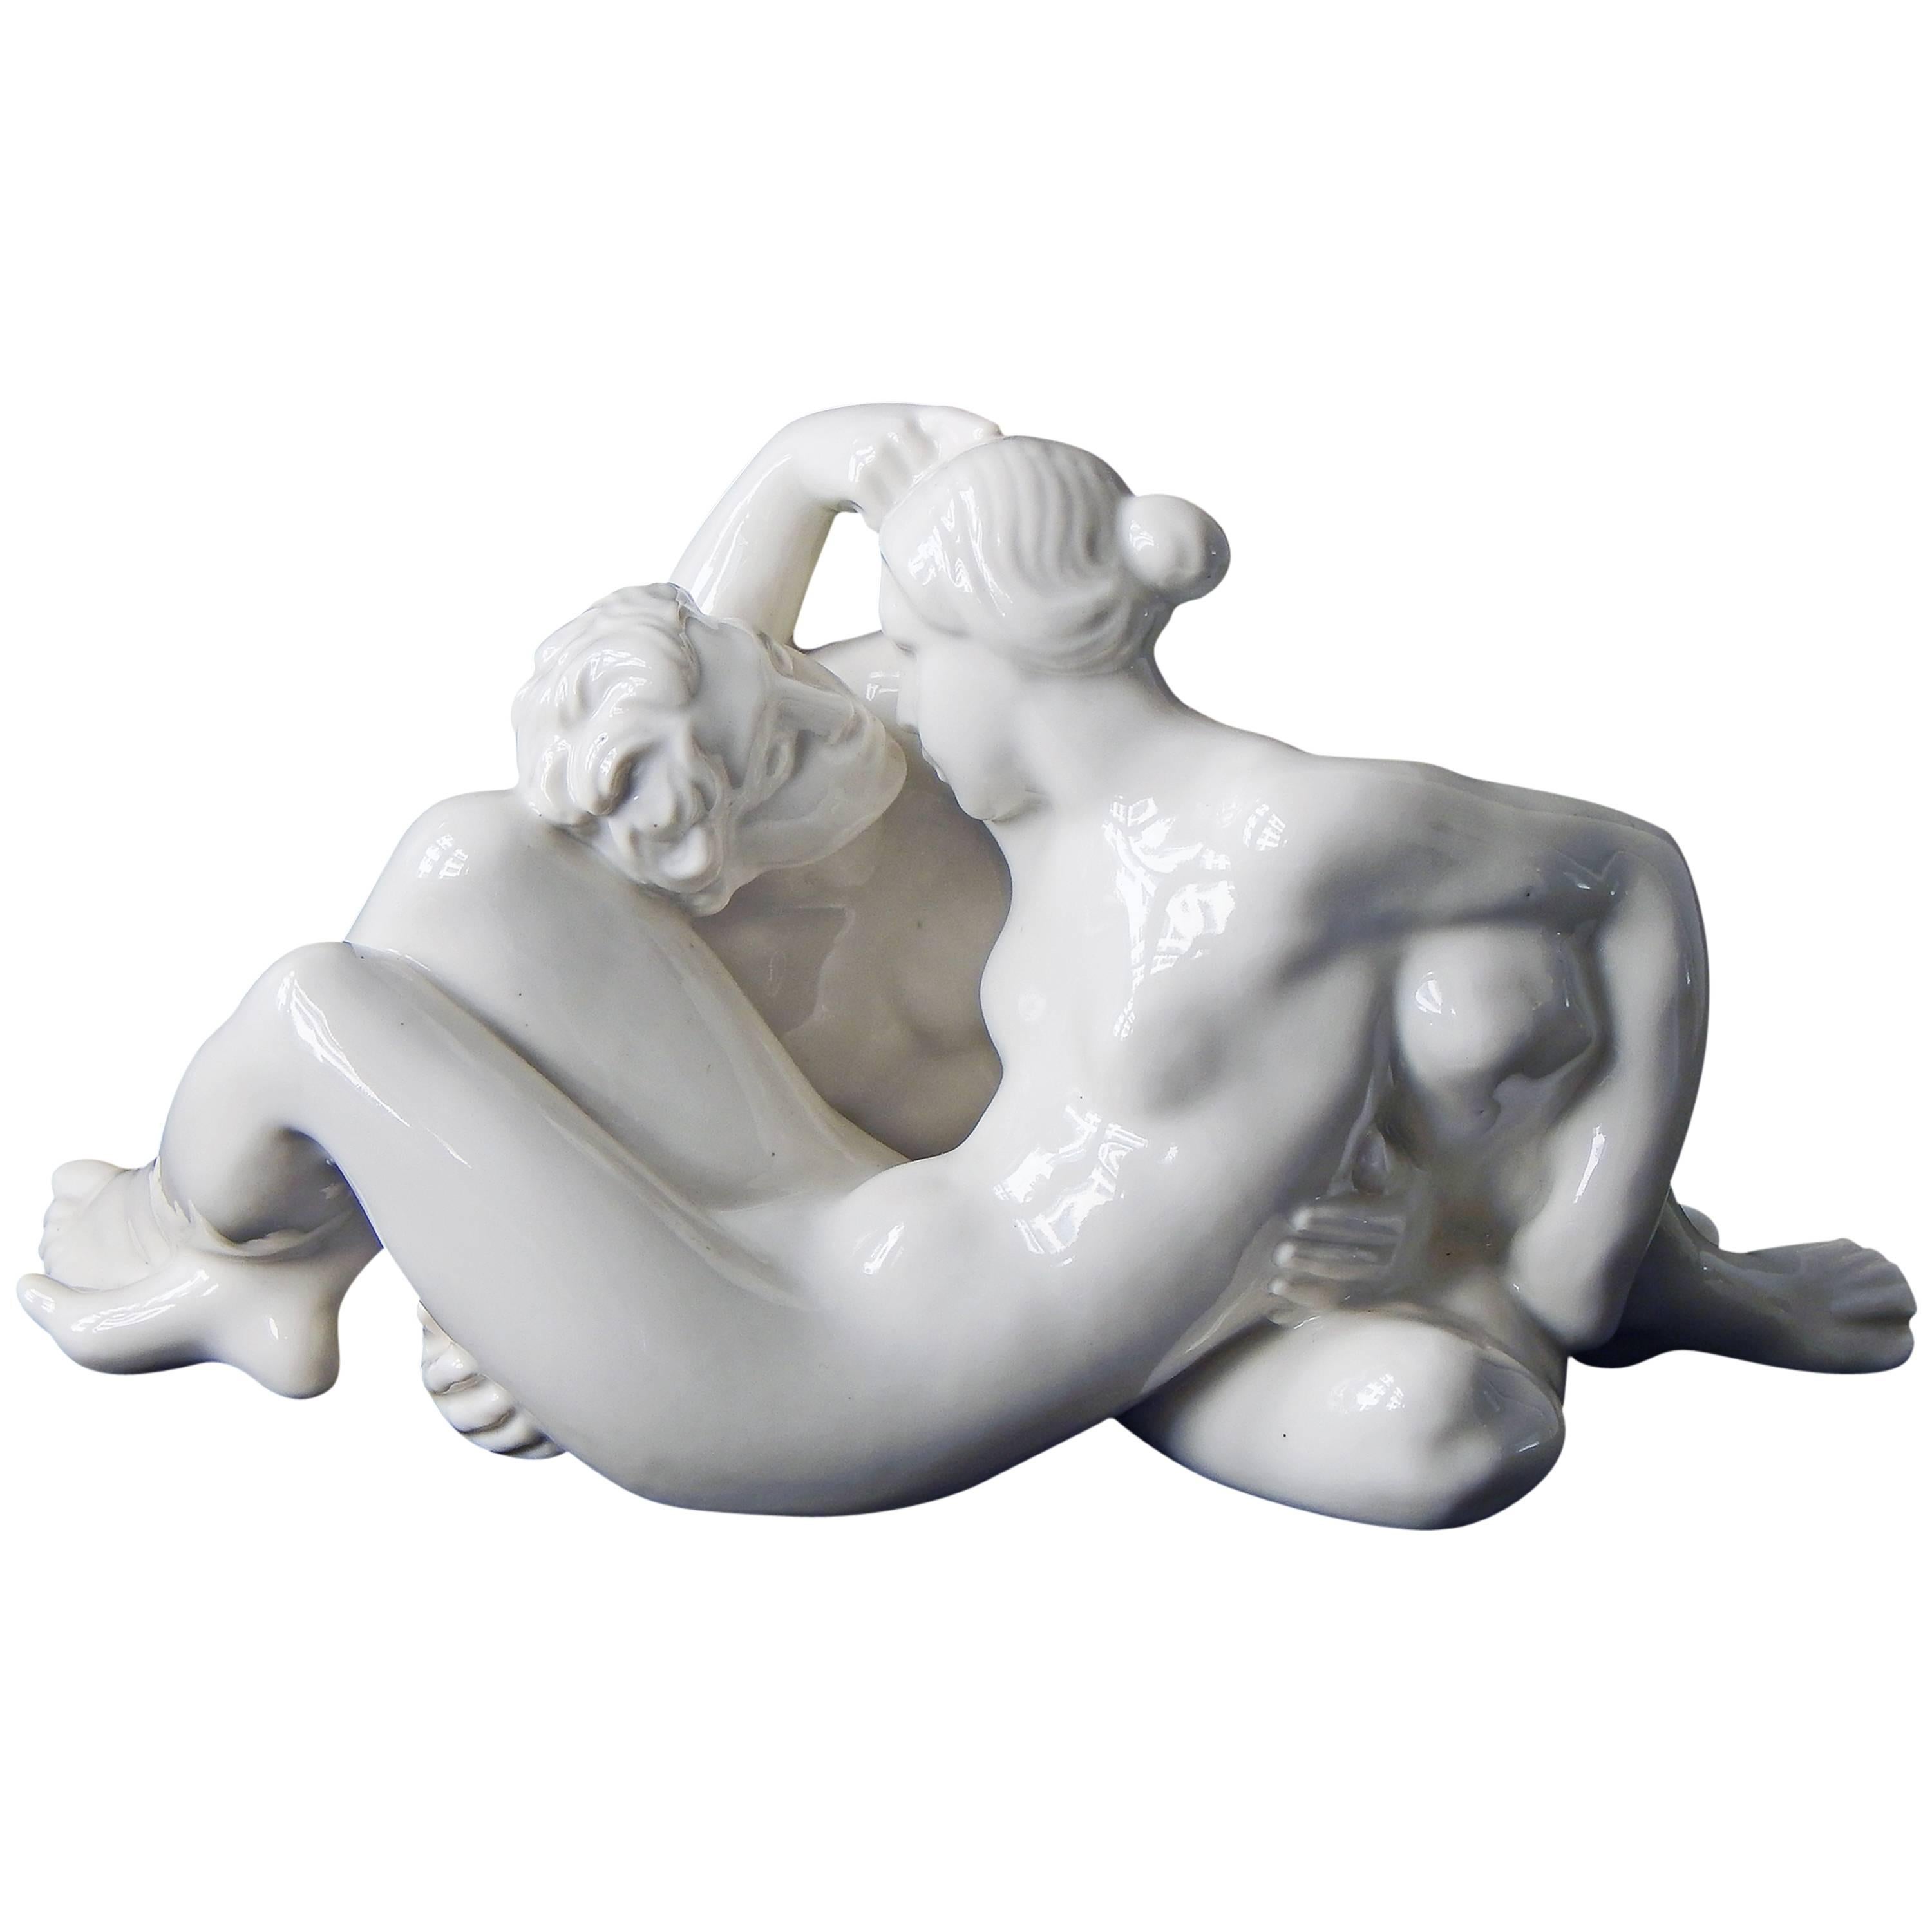 "Adam and Eve, " Sensuous Art Deco Porcelain Sculpture with Nudes by Bregnoe